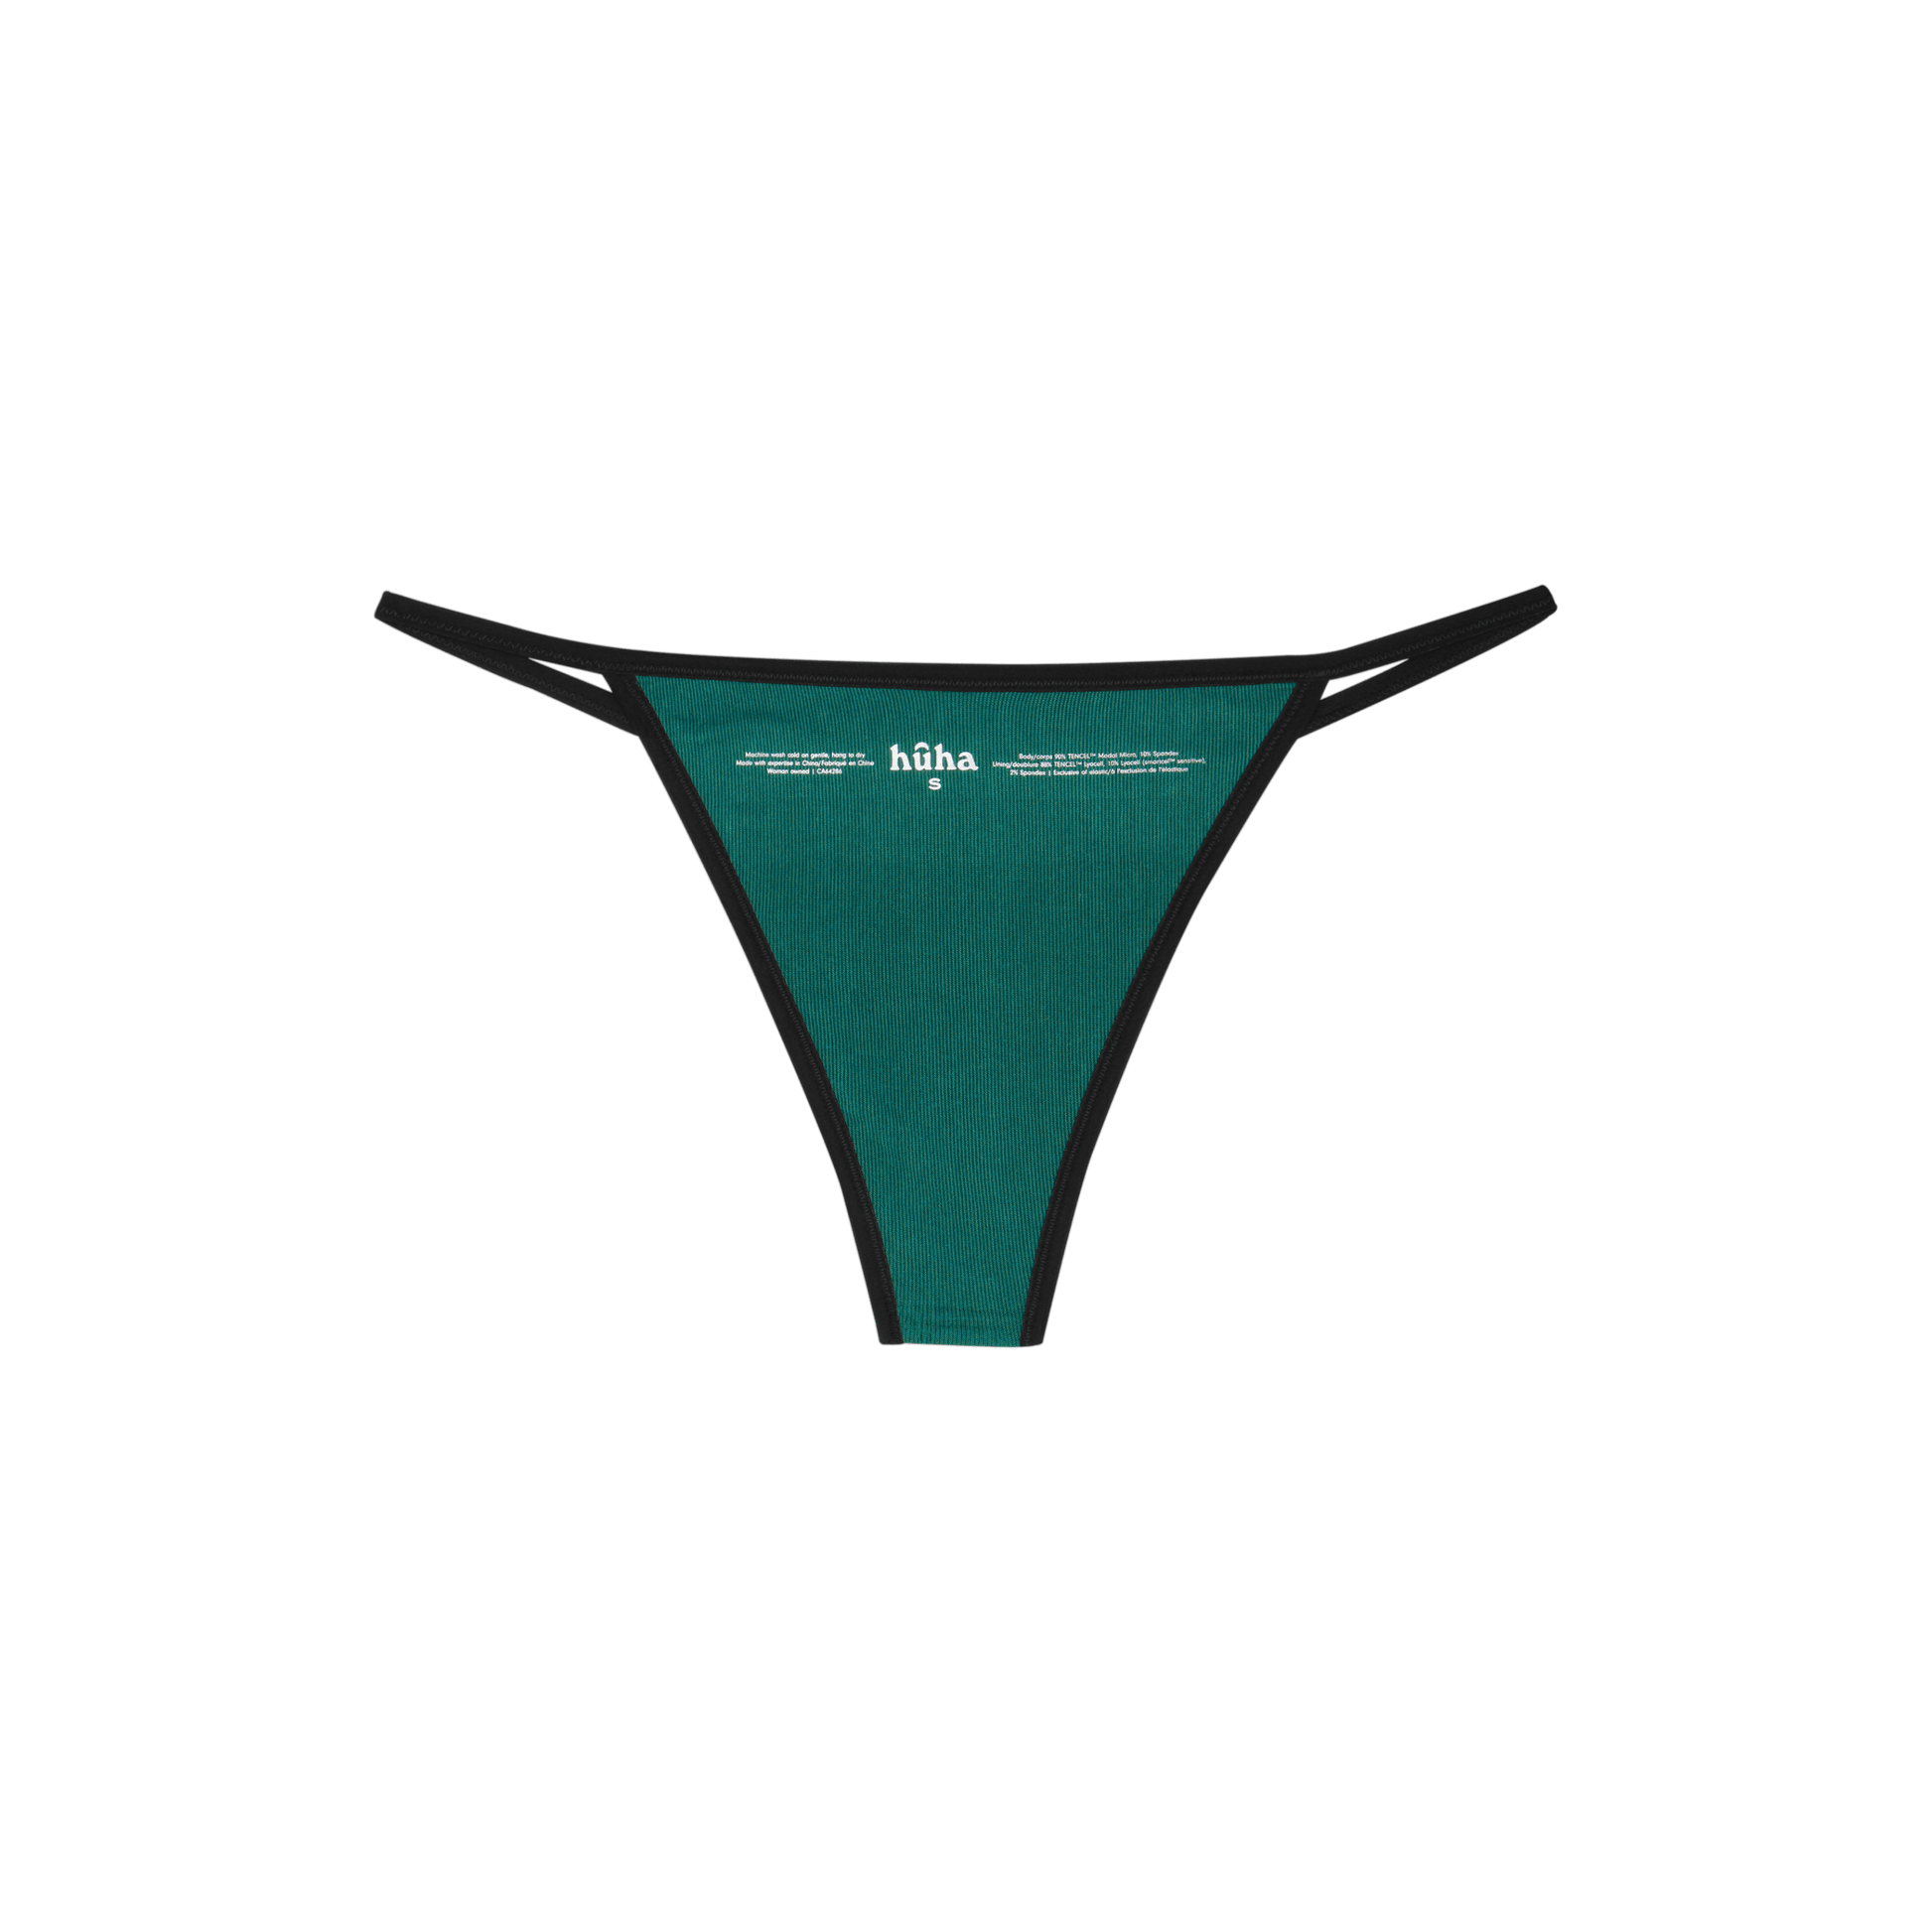 Women Open Crotch Sheer Thong T Panties G-string Palestine